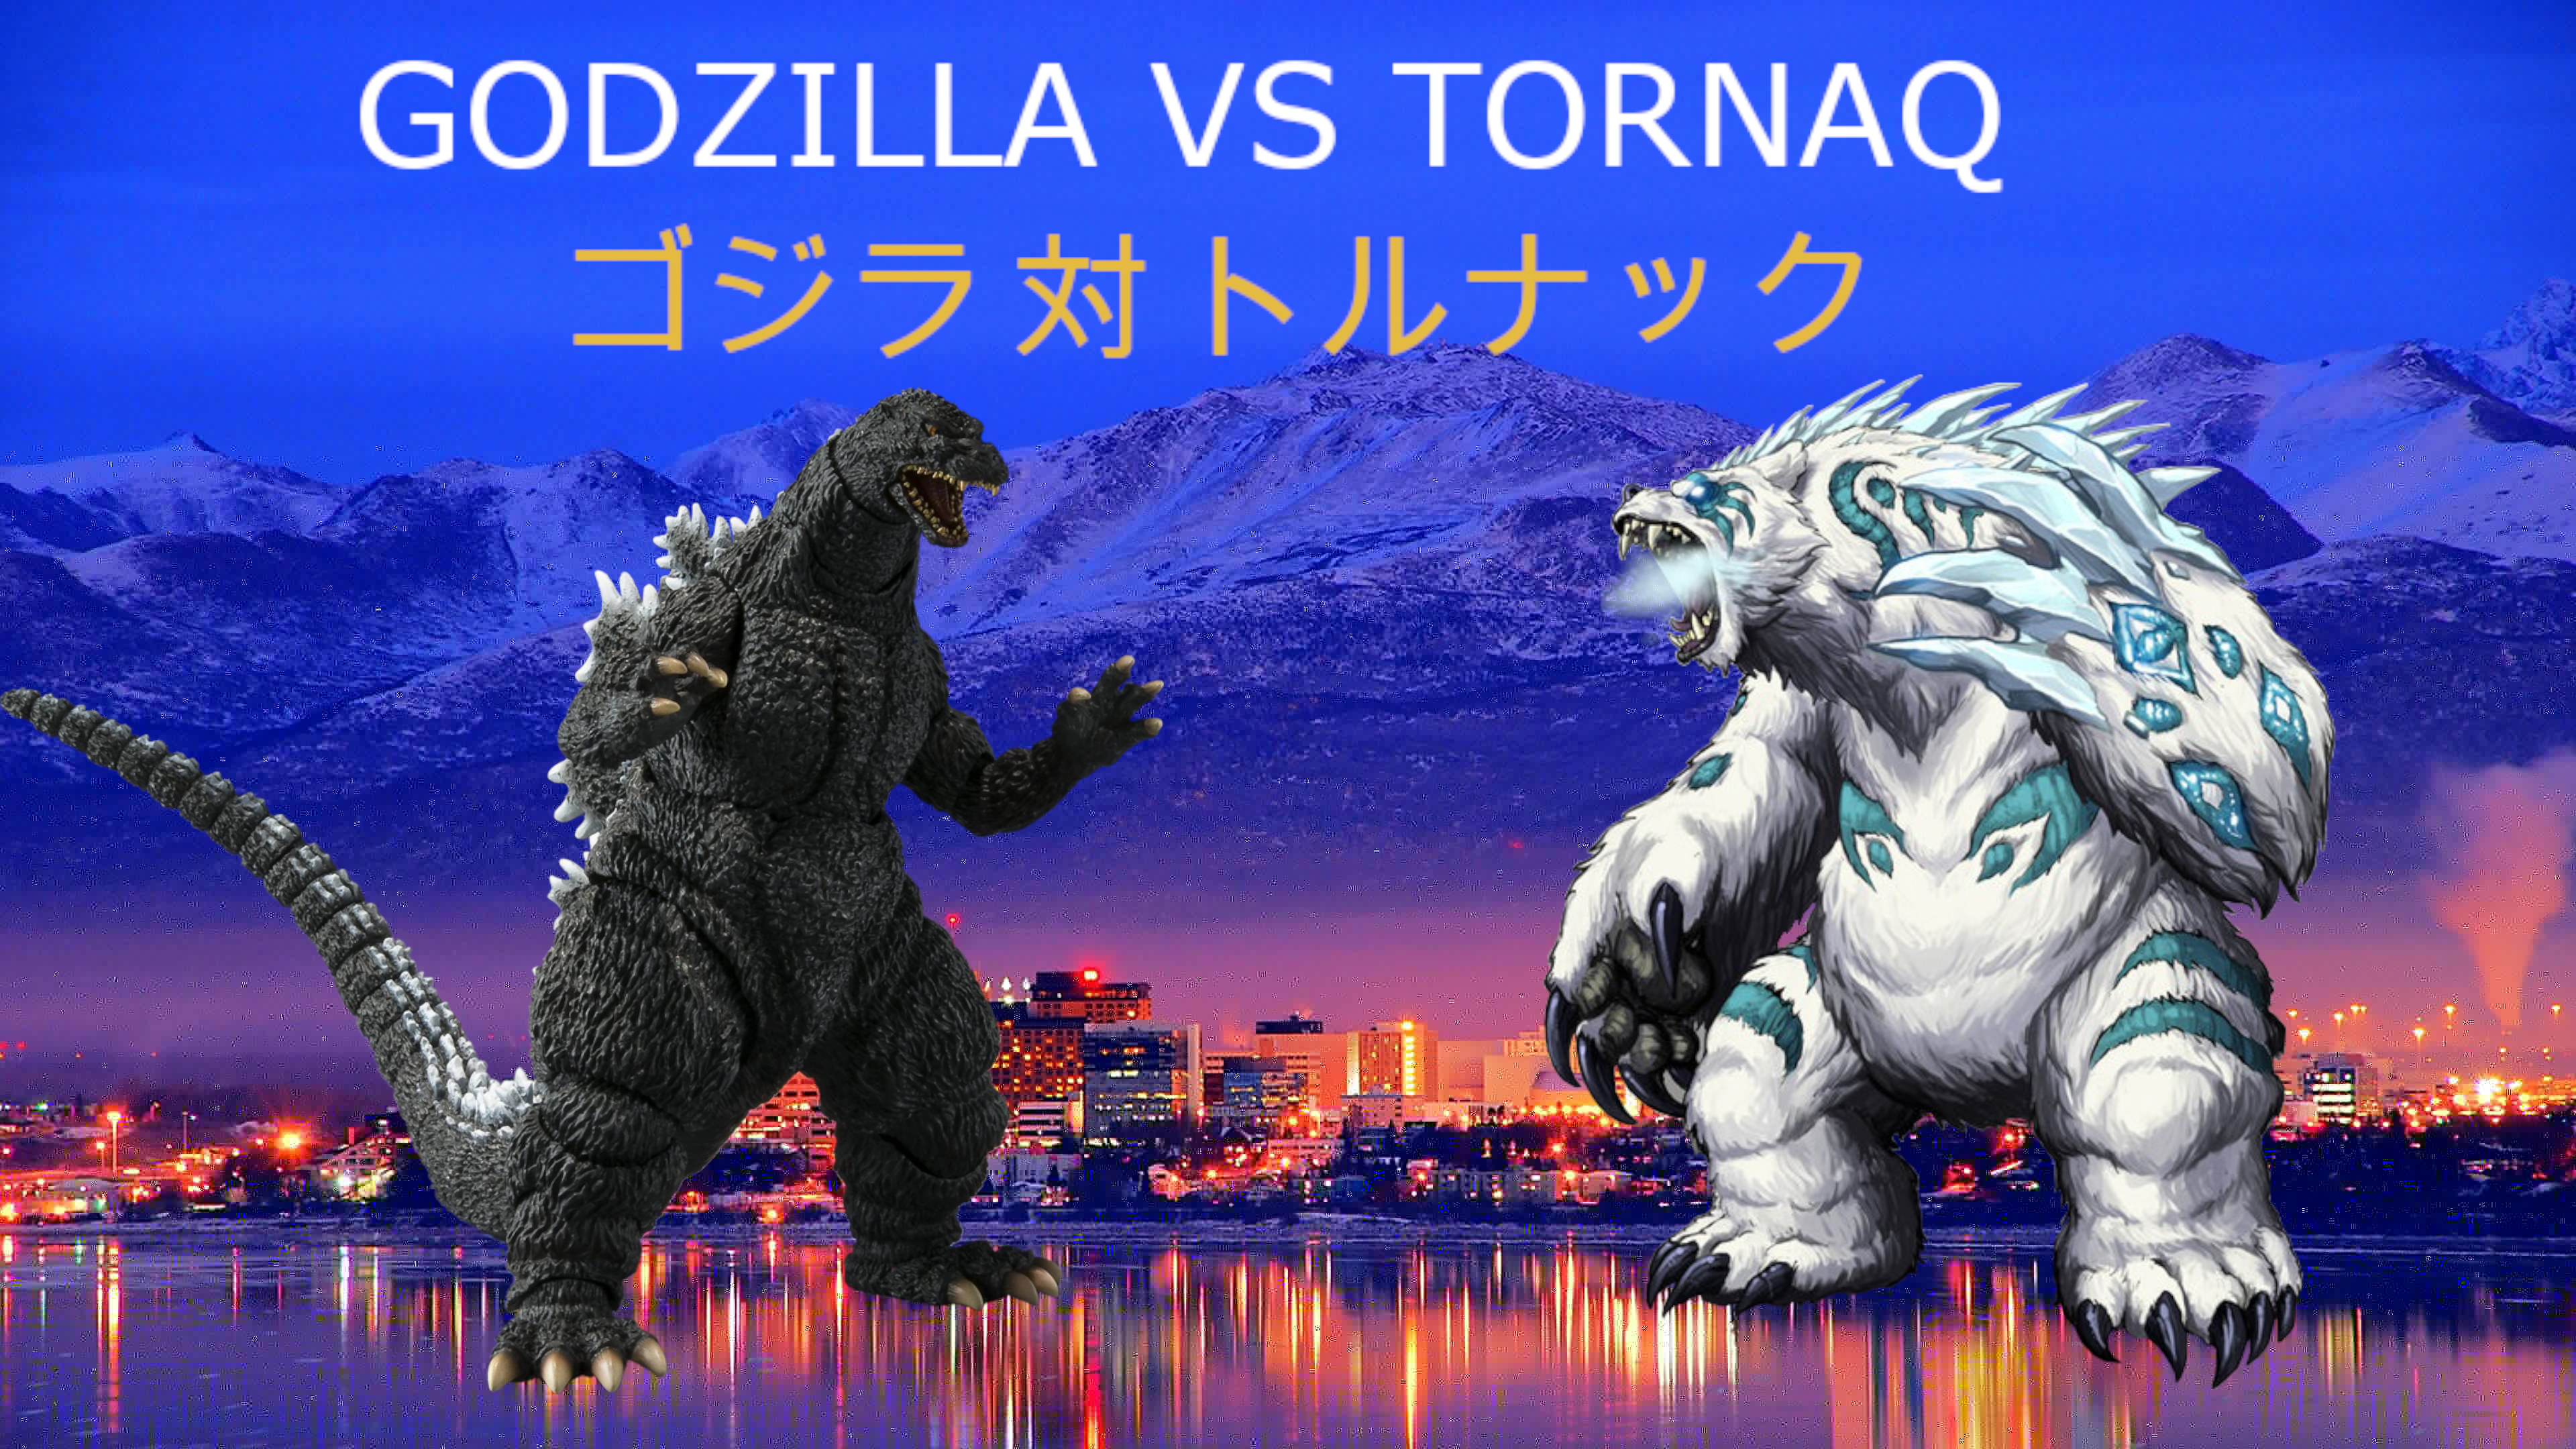 Godzilla earth compared to g19 by nrnnfjf on DeviantArt